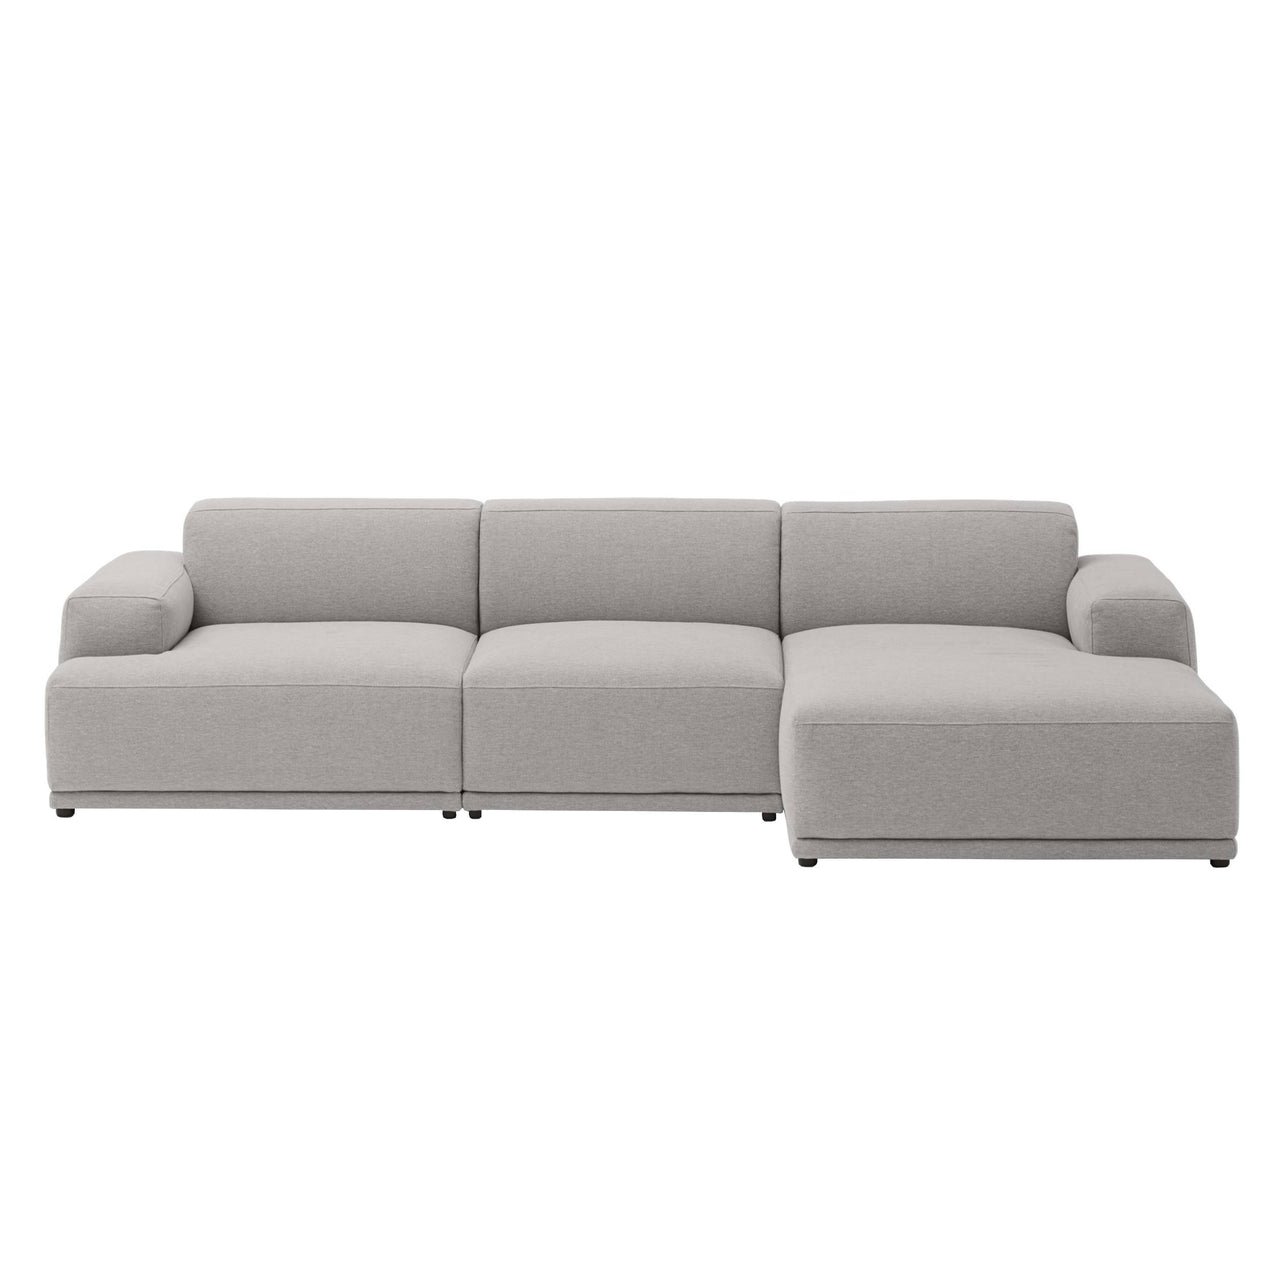 Connect Soft Modular Sofa: 3 Seater + Configuration 2